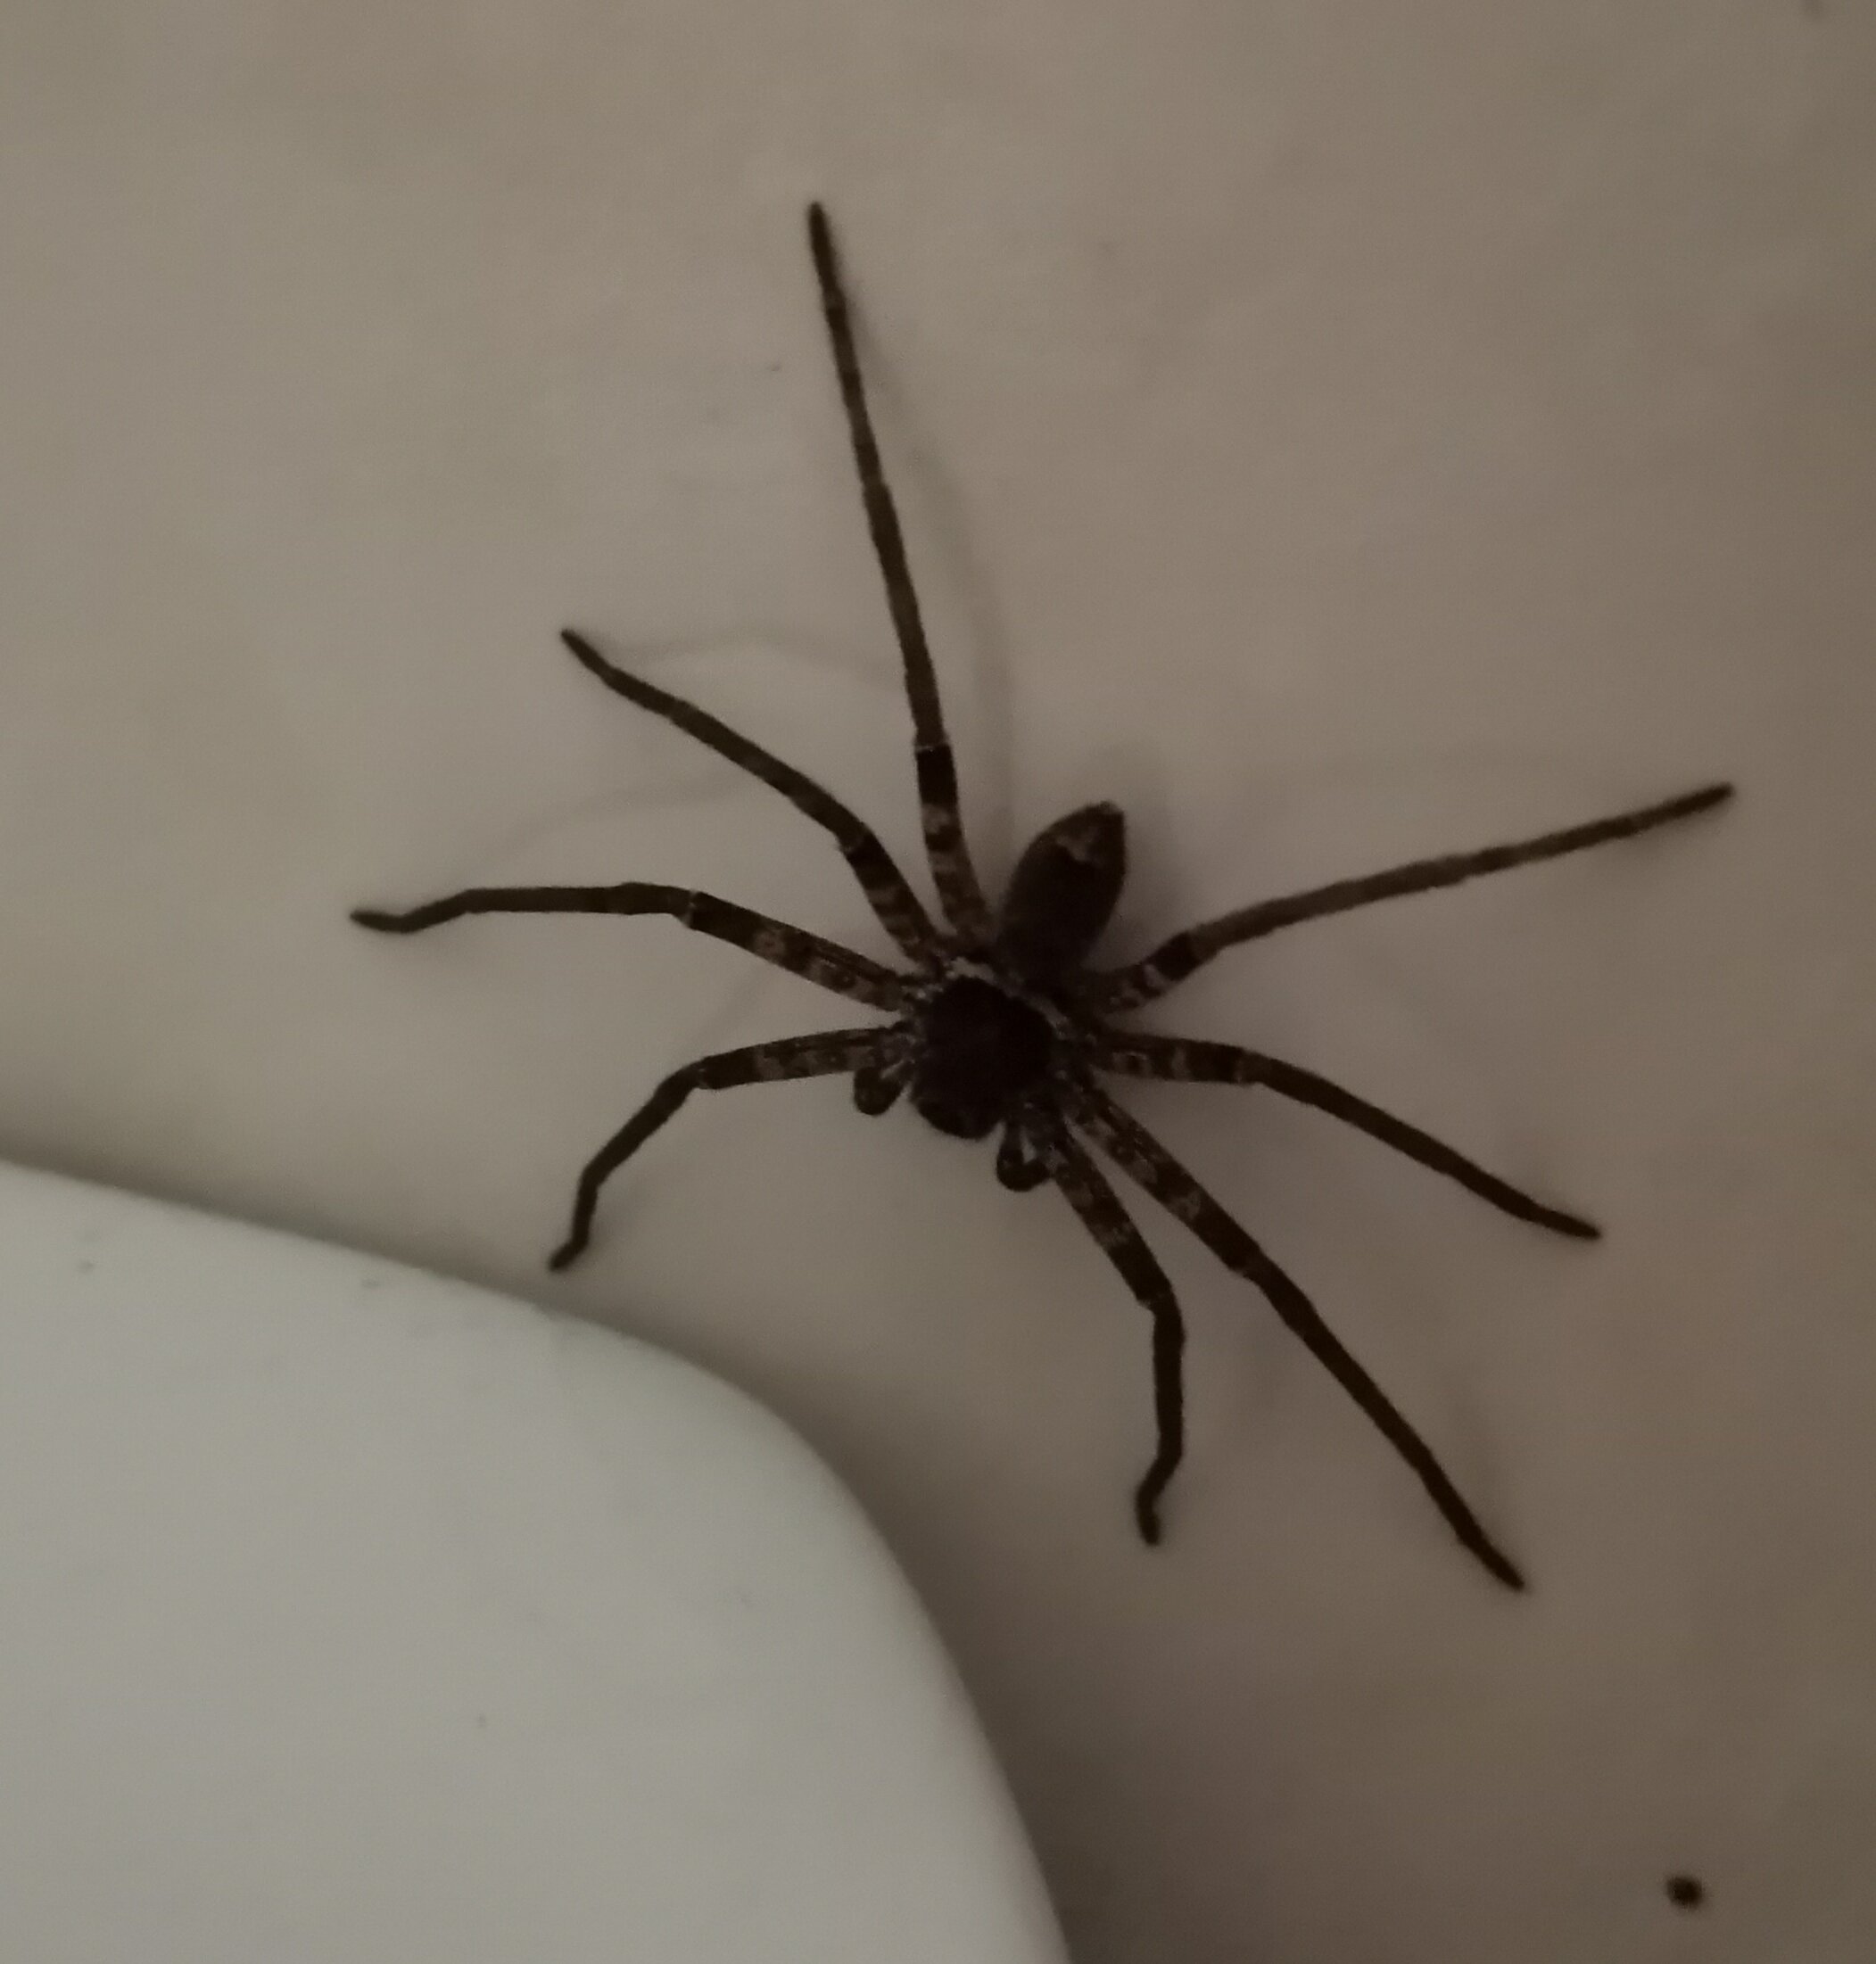 A poisonous Huntsman spider inside our huts